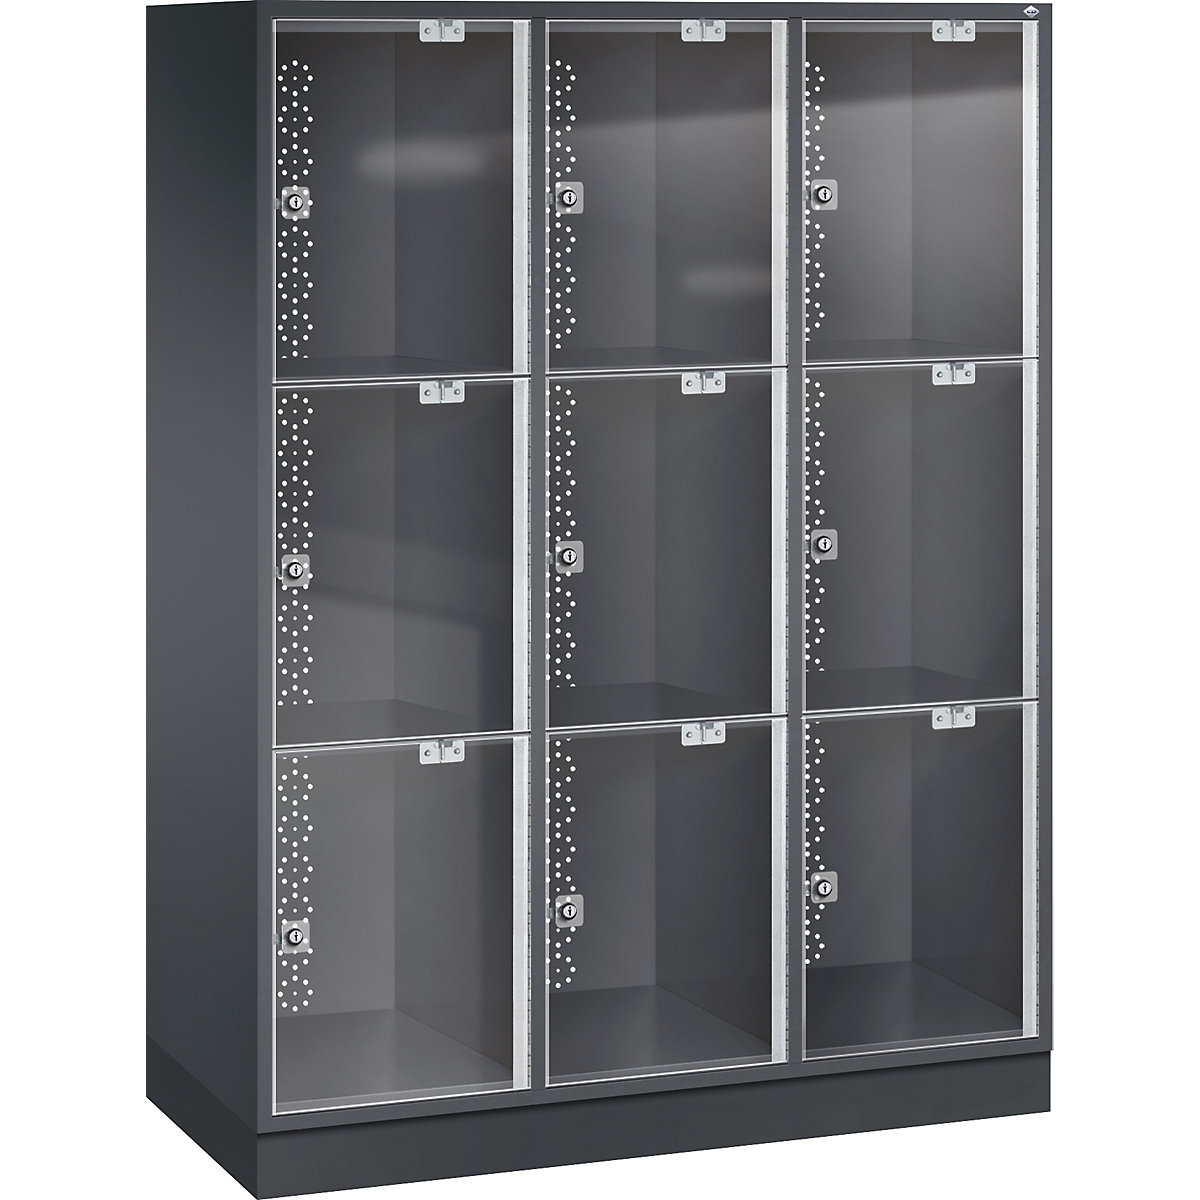 INTRO steel compartment locker with acrylic glass door - C+P